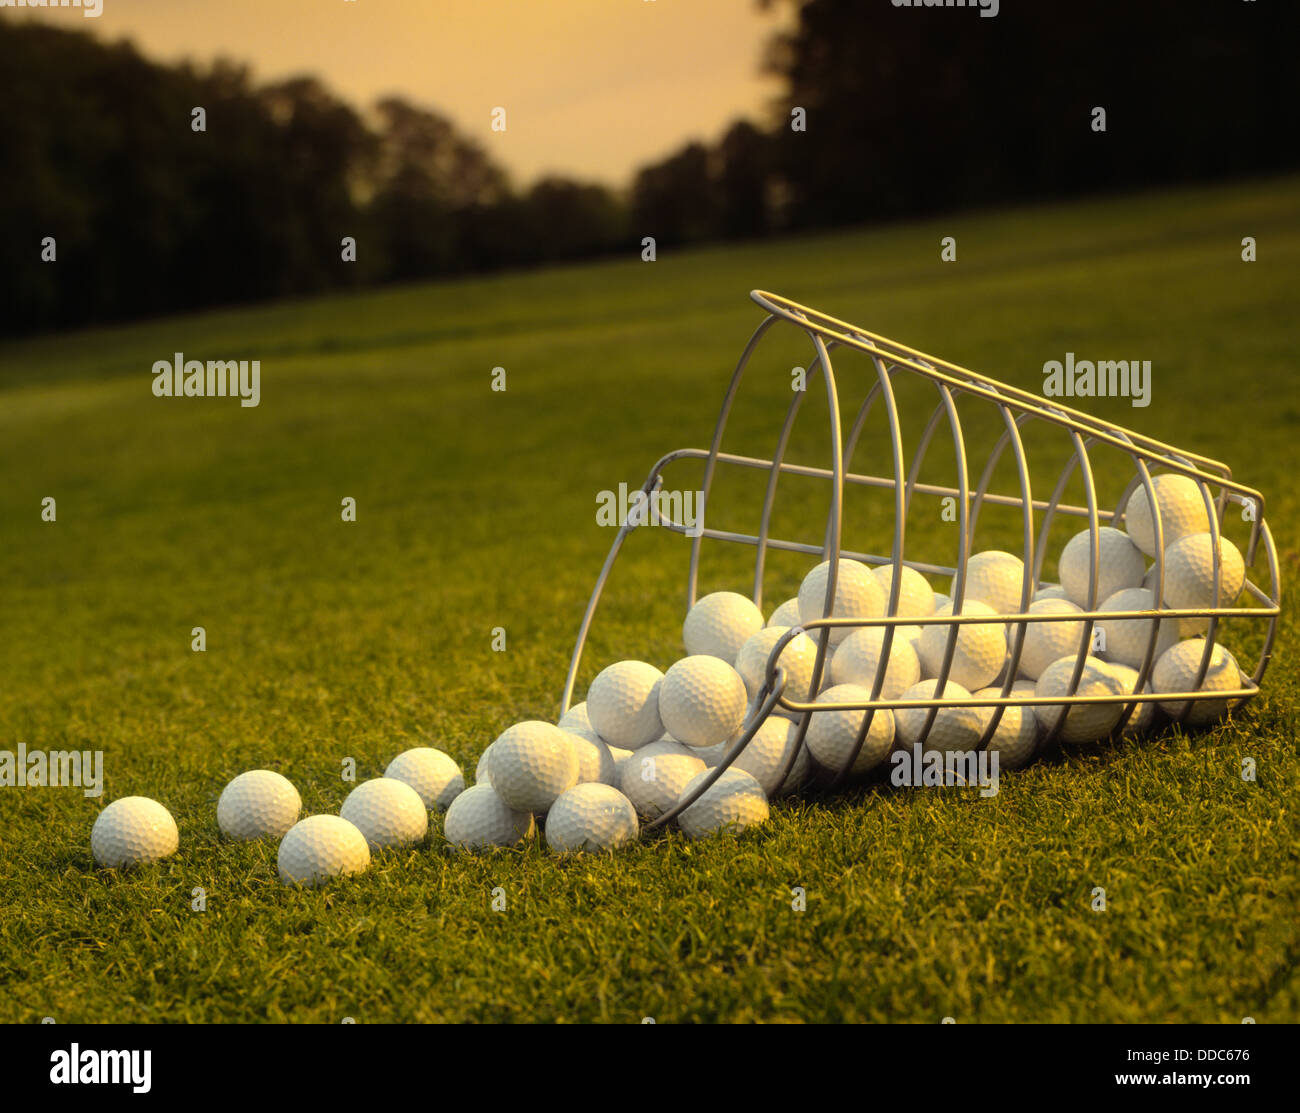 Spilled Golf Balls Stock Photo